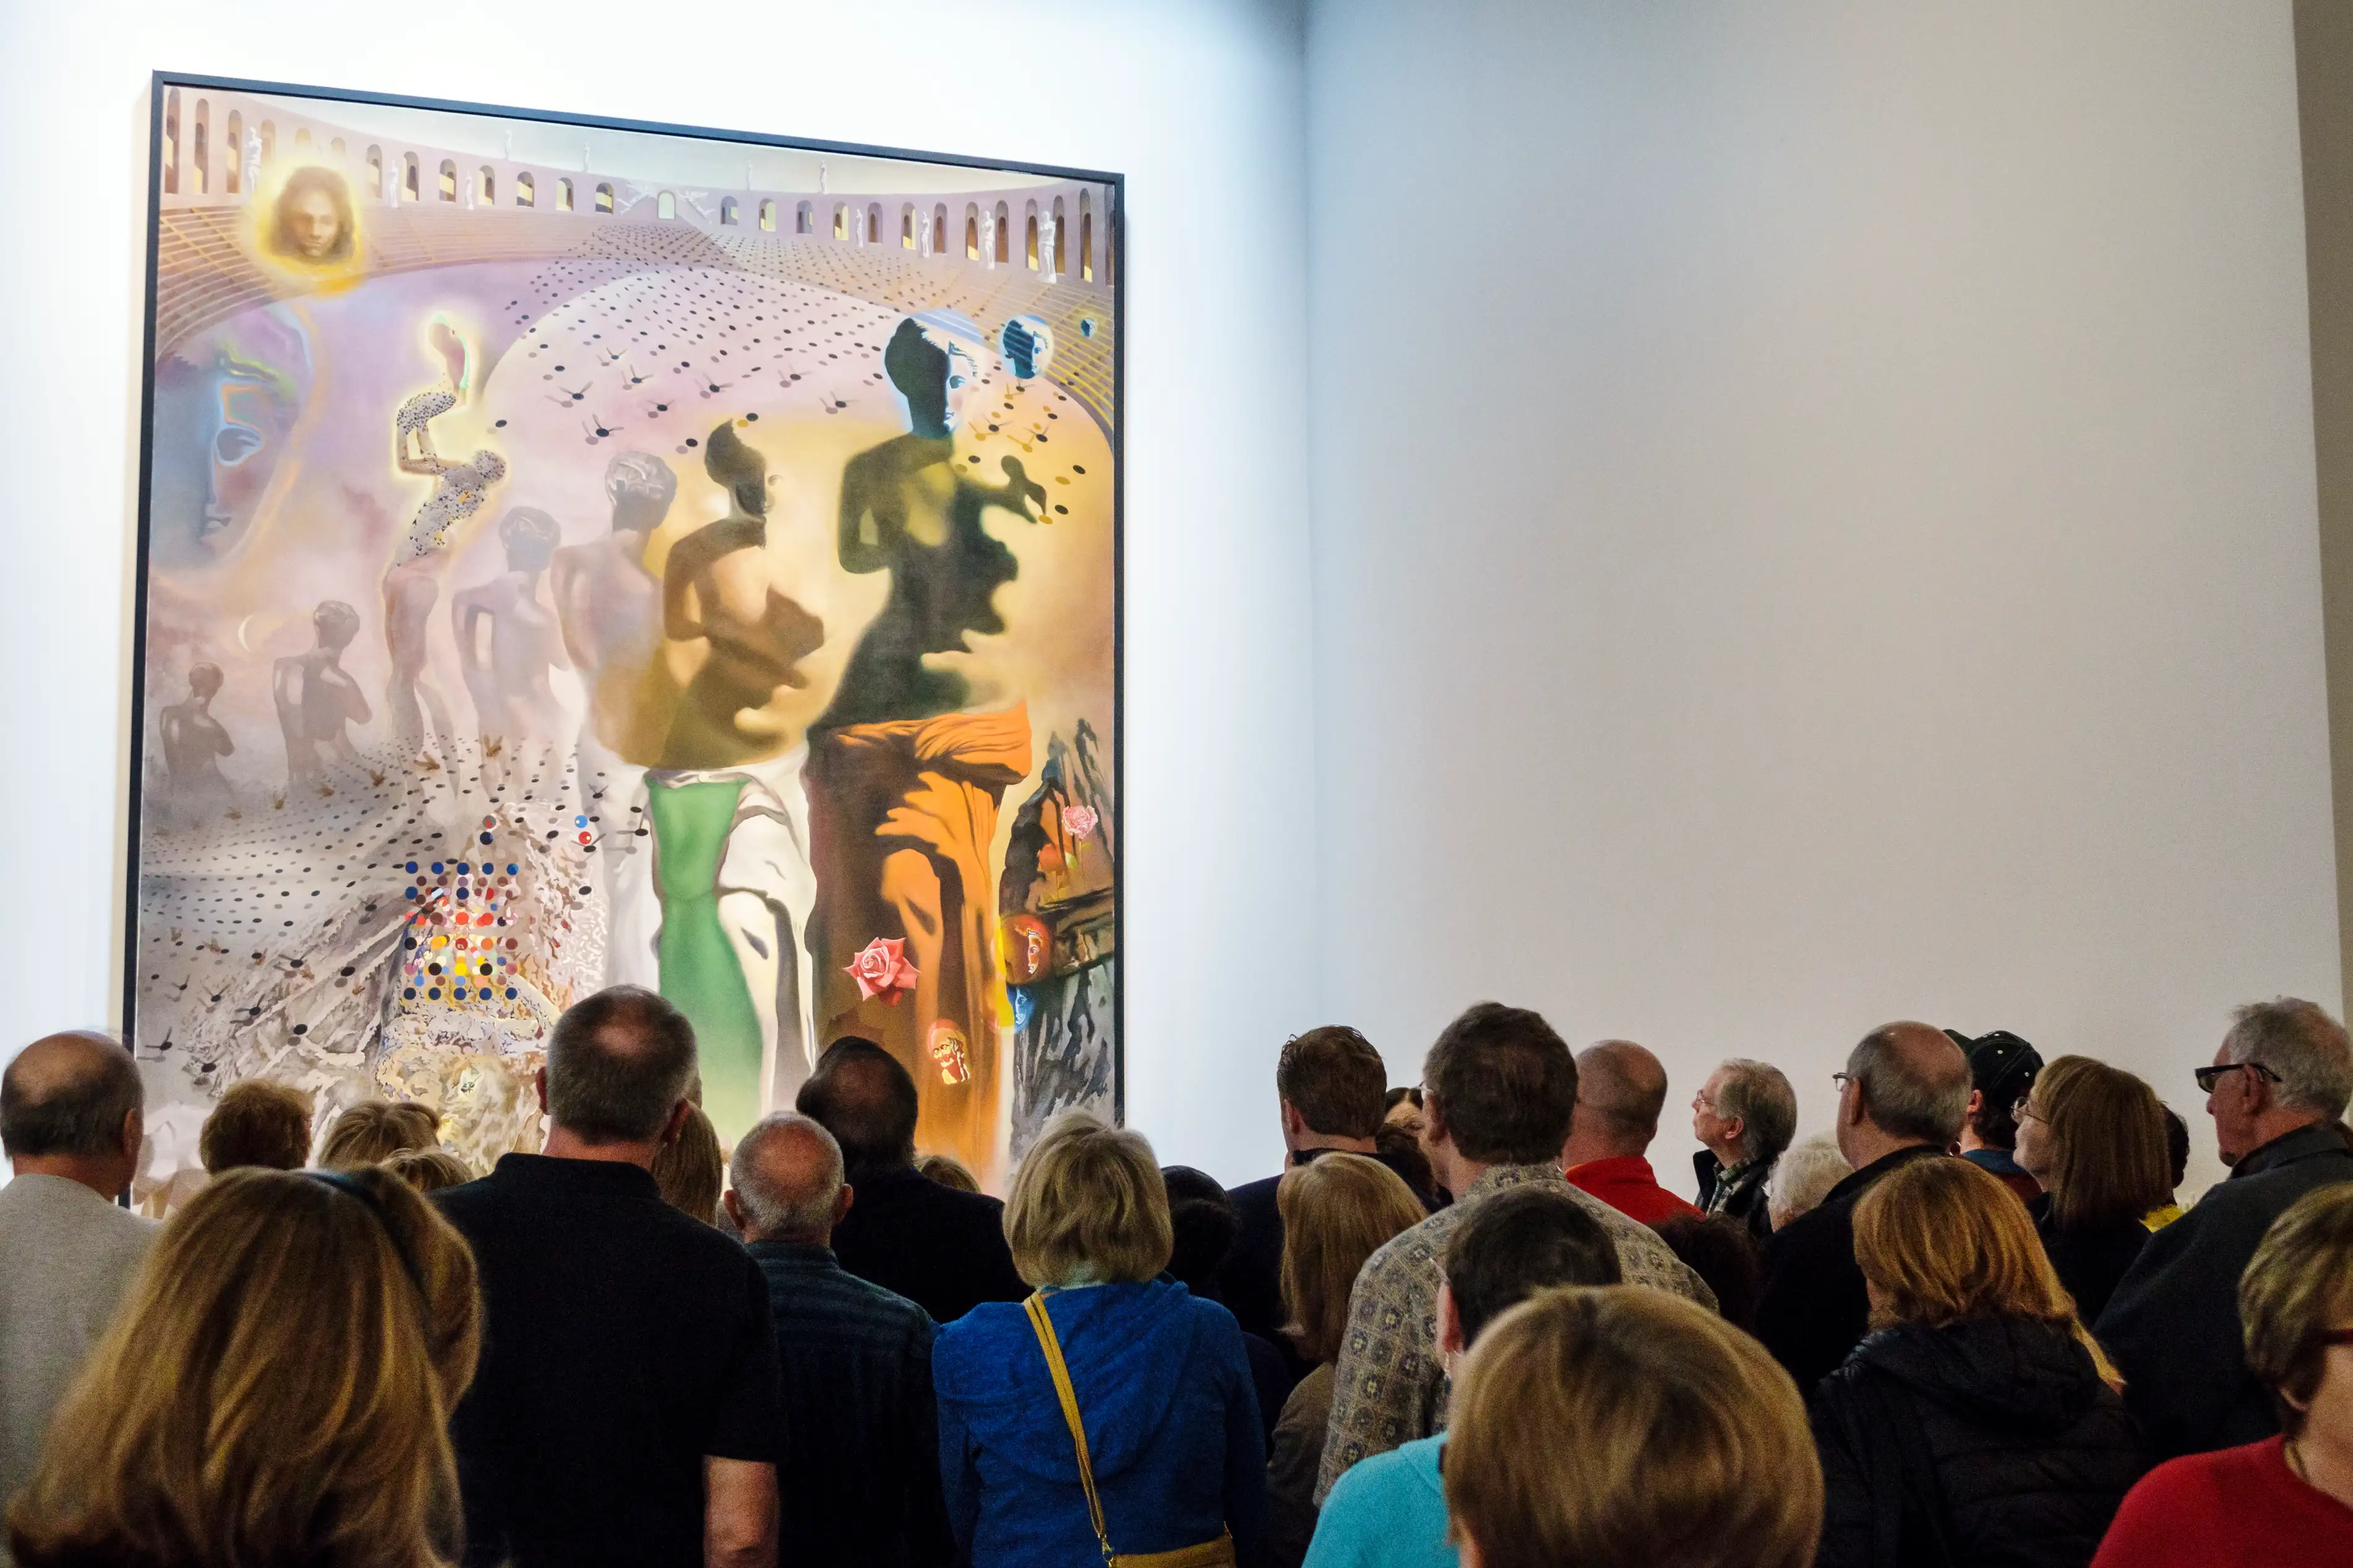 A guide explaining the Hallucinogenic Toreador painting inside the Salvador Dali Museum.